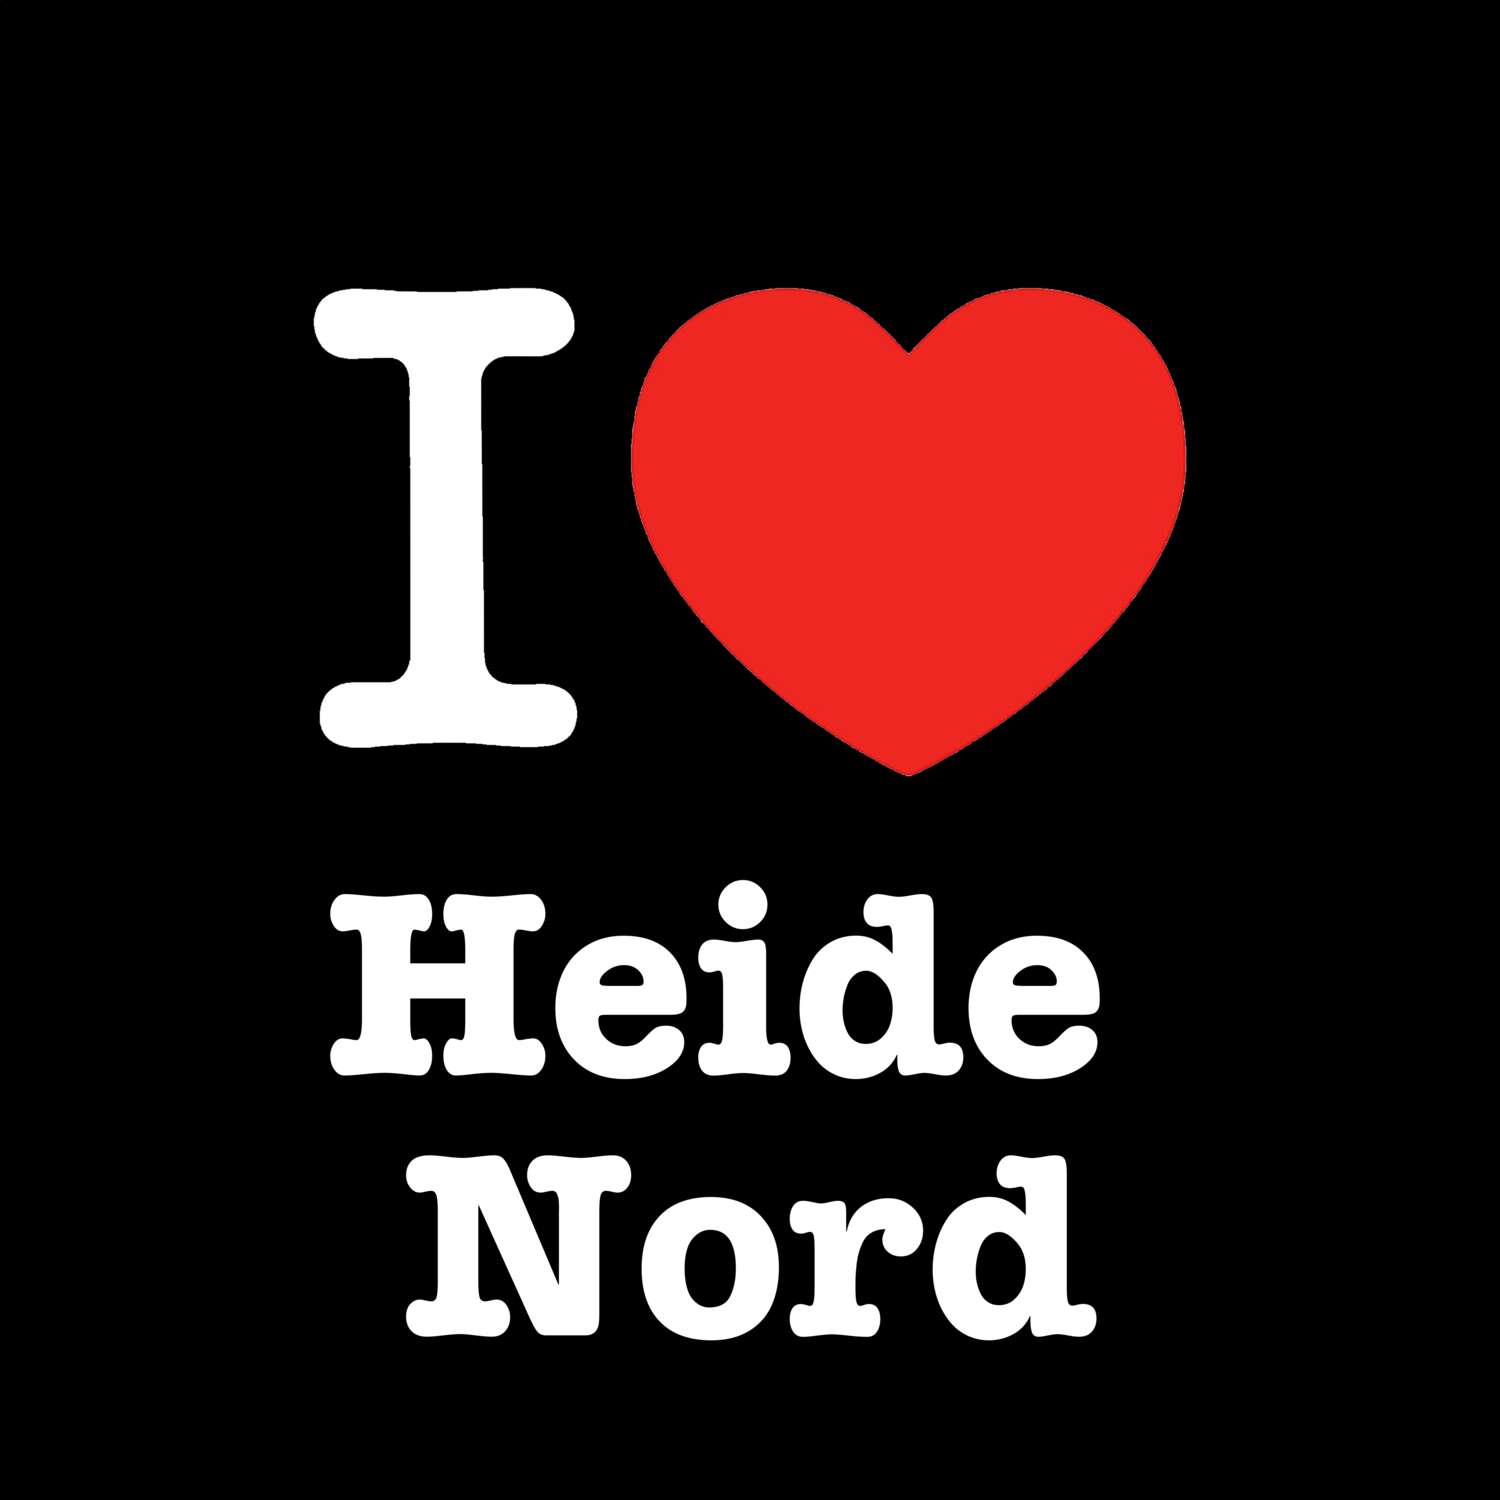 Heide Nord T-Shirt »I love«